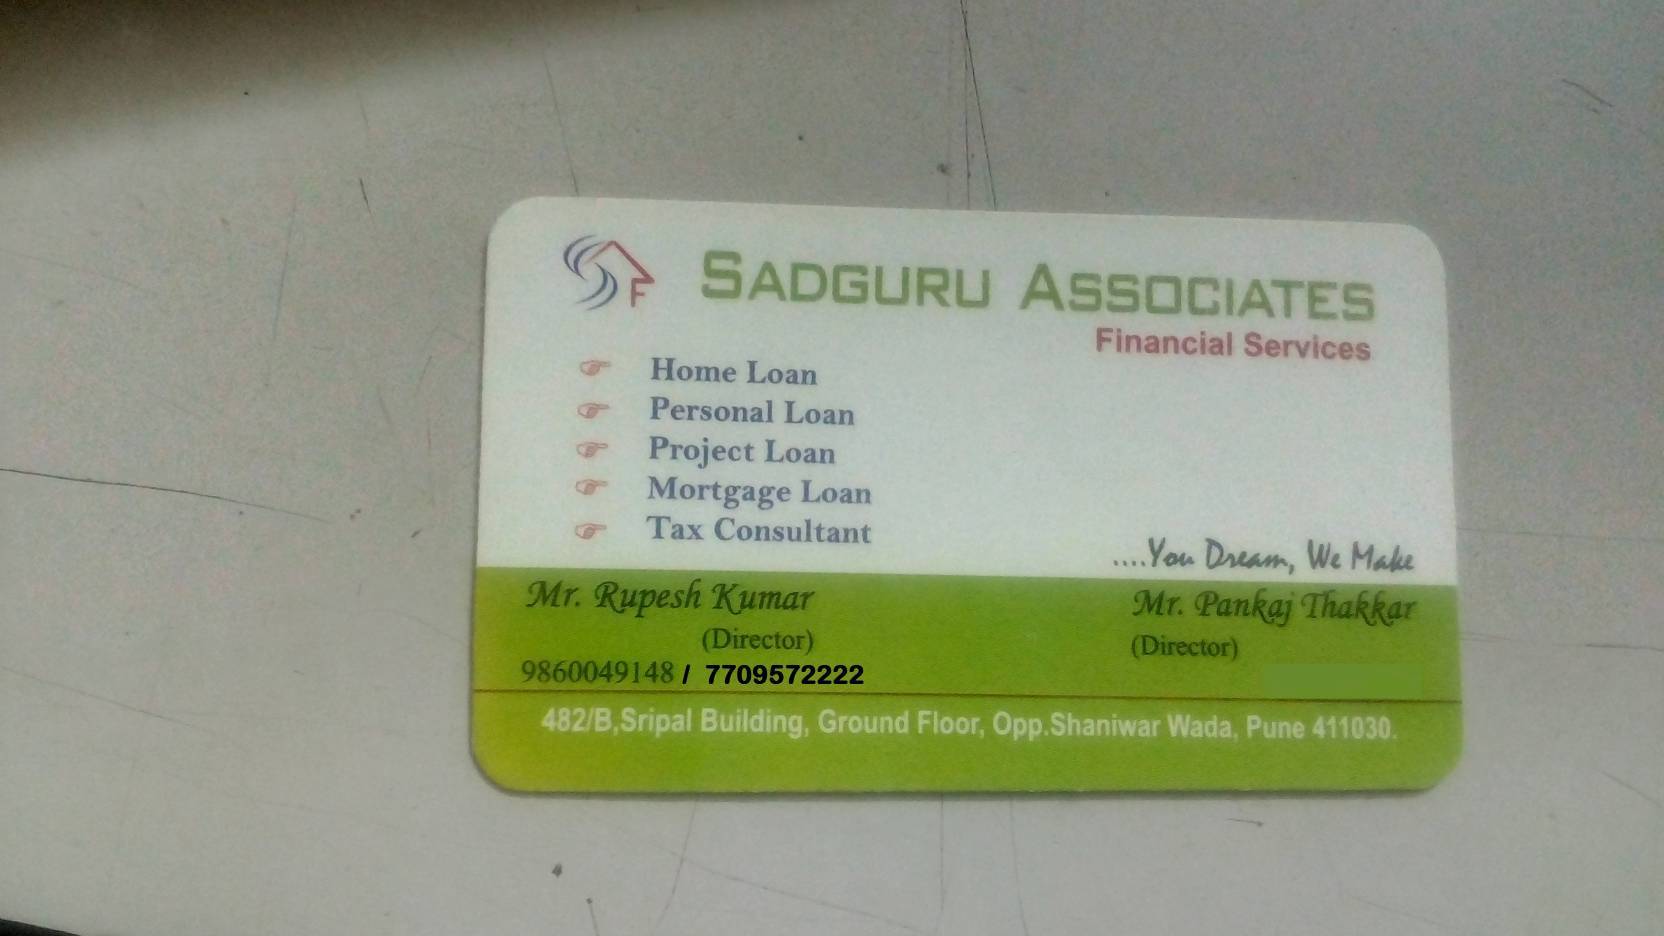 Sadguru Associates , Axis Bank in pune, Pune